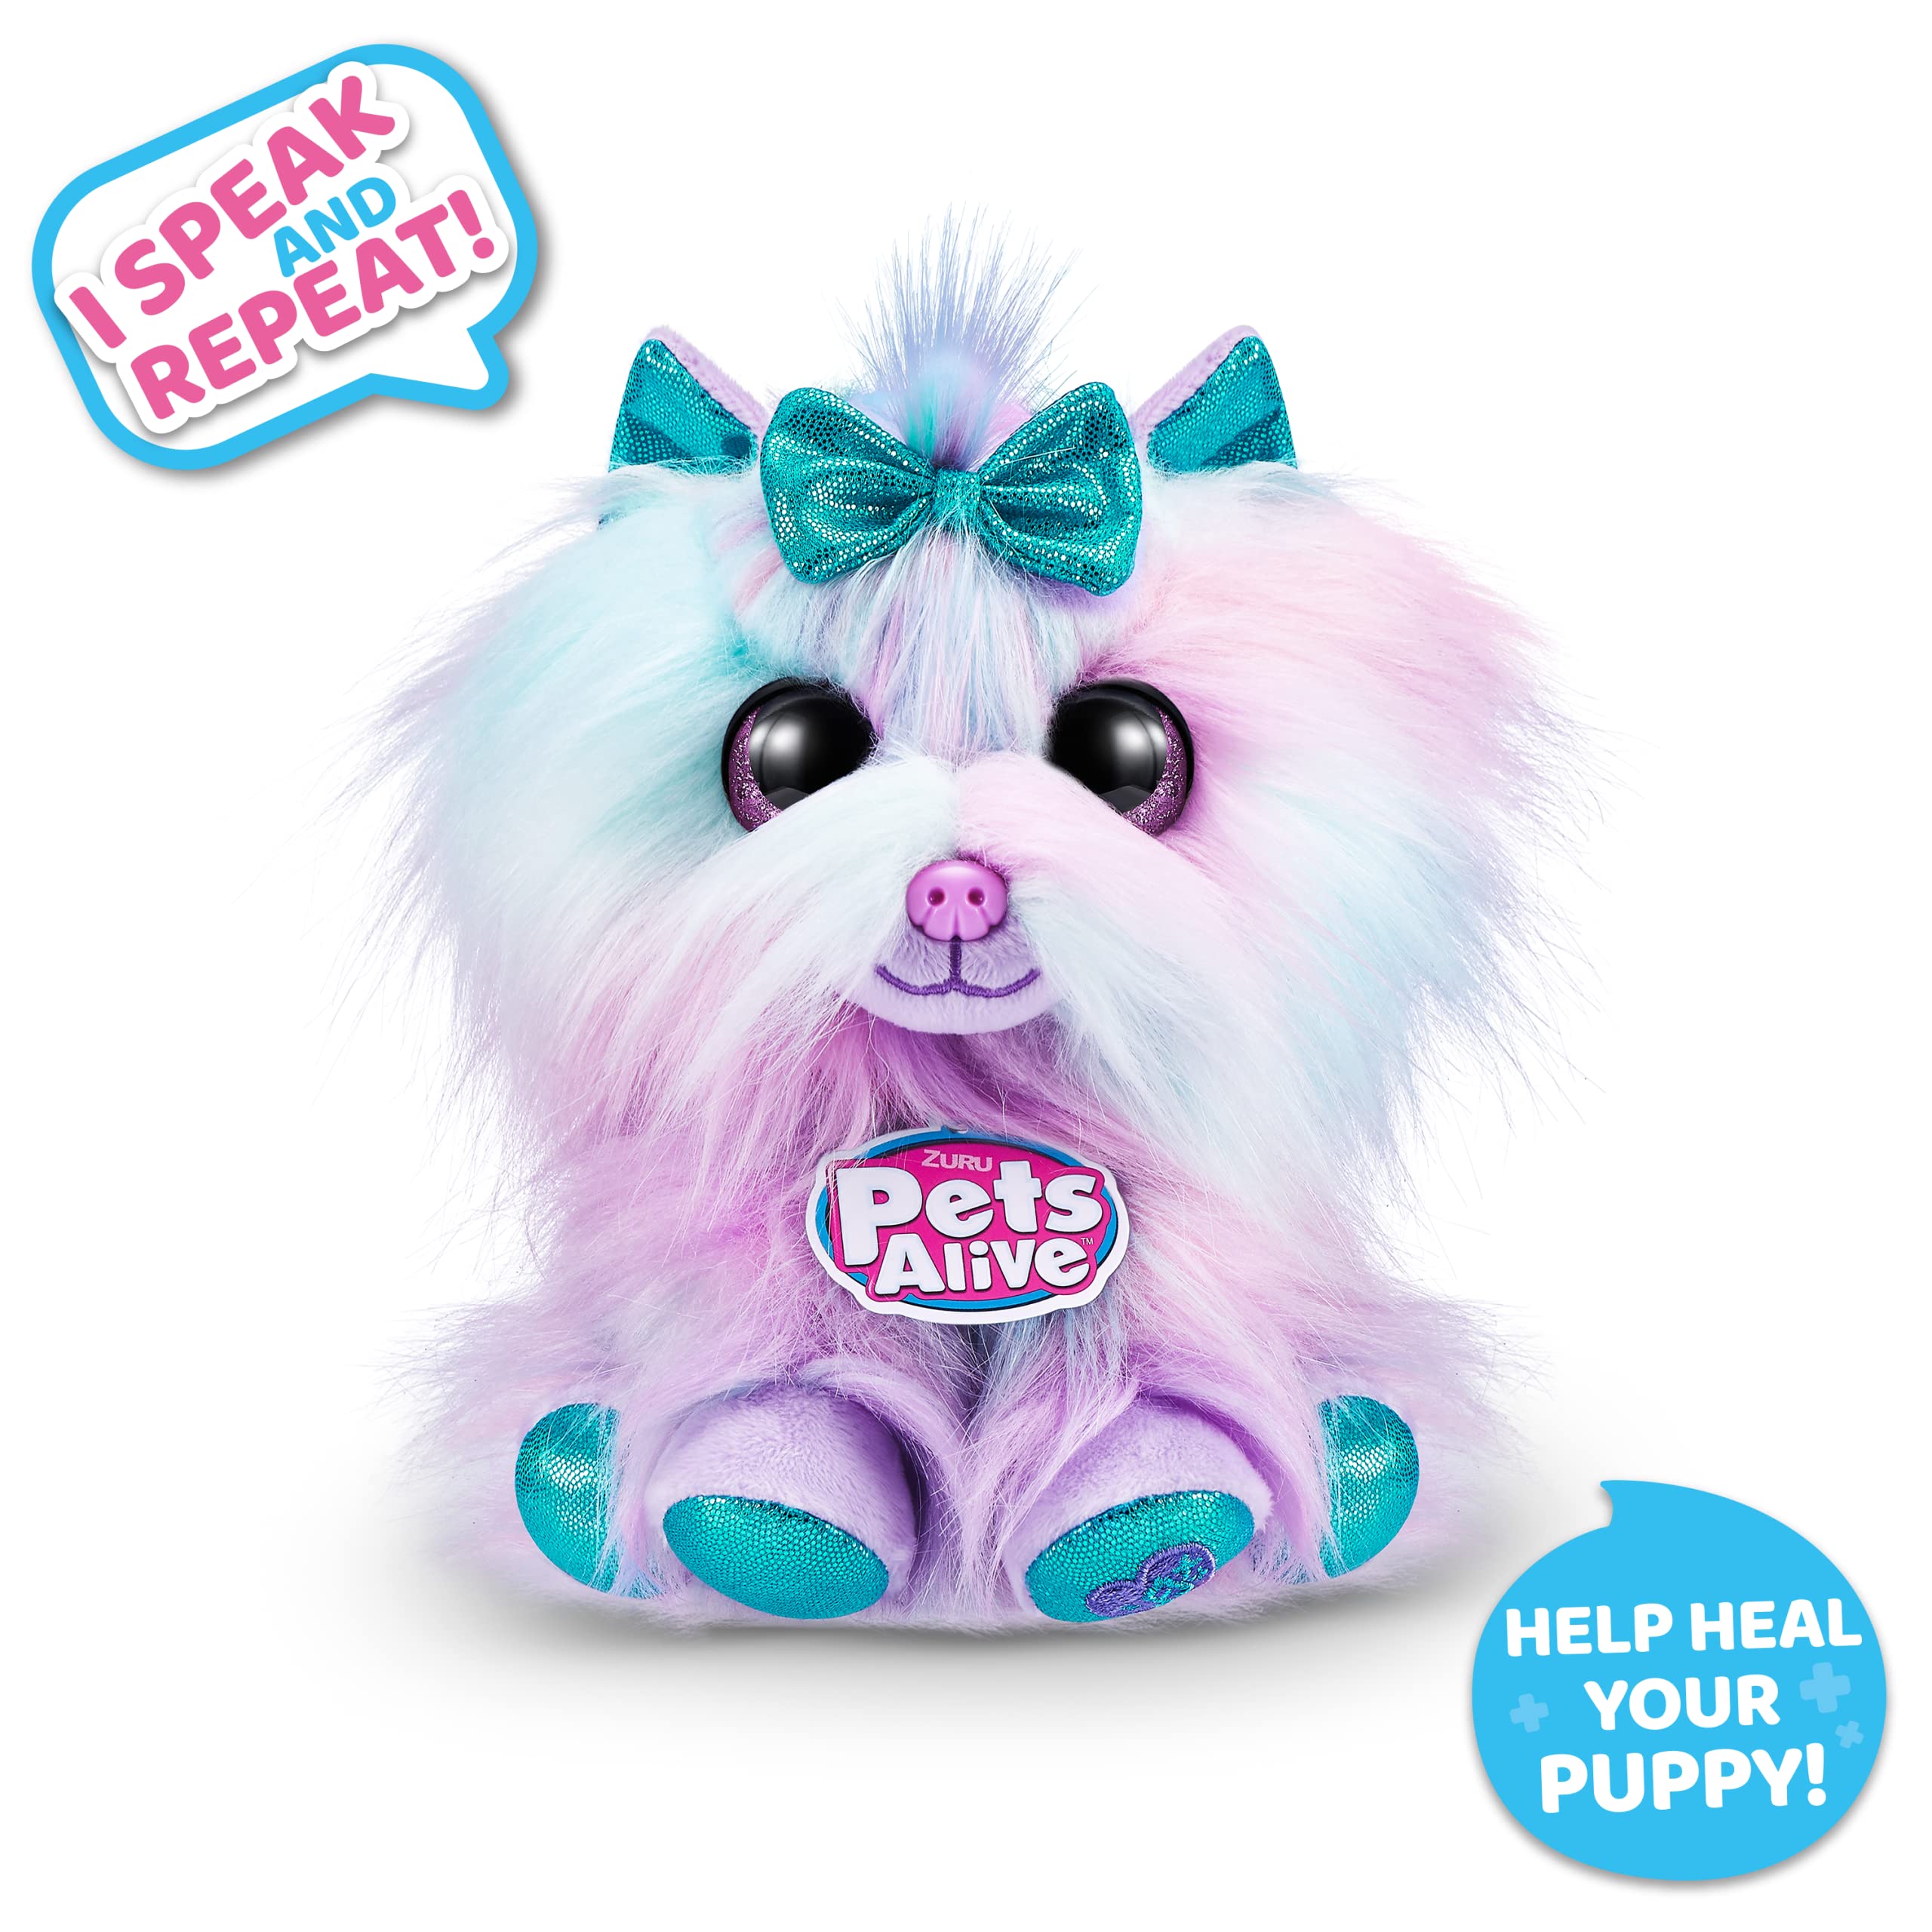 Pets Alive Pet Shop Surprise S3 Puppy Rescue (Yorkshire) by ZURU Surprise Puppy Plush, Ultra Soft Plushies, Compound Surprises Inside, Interactive Toy Pets, Electronic Speak and Repeat